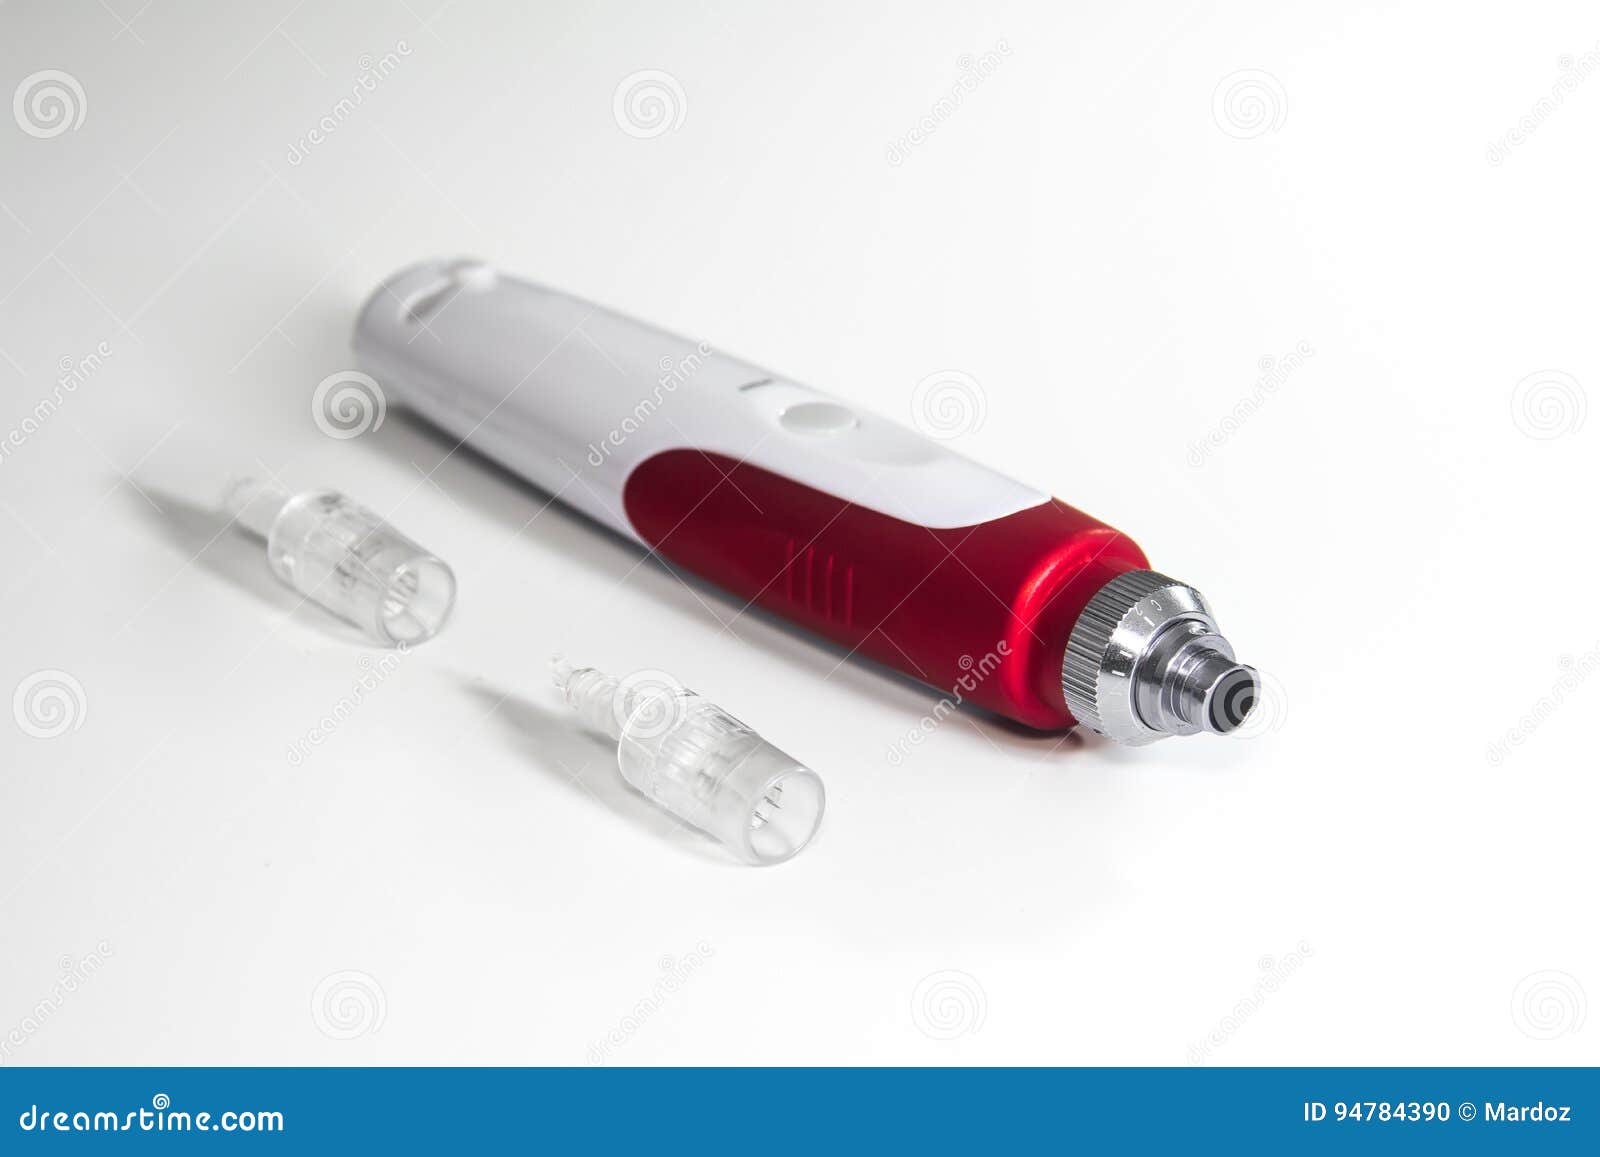 dermis needle therapy pen